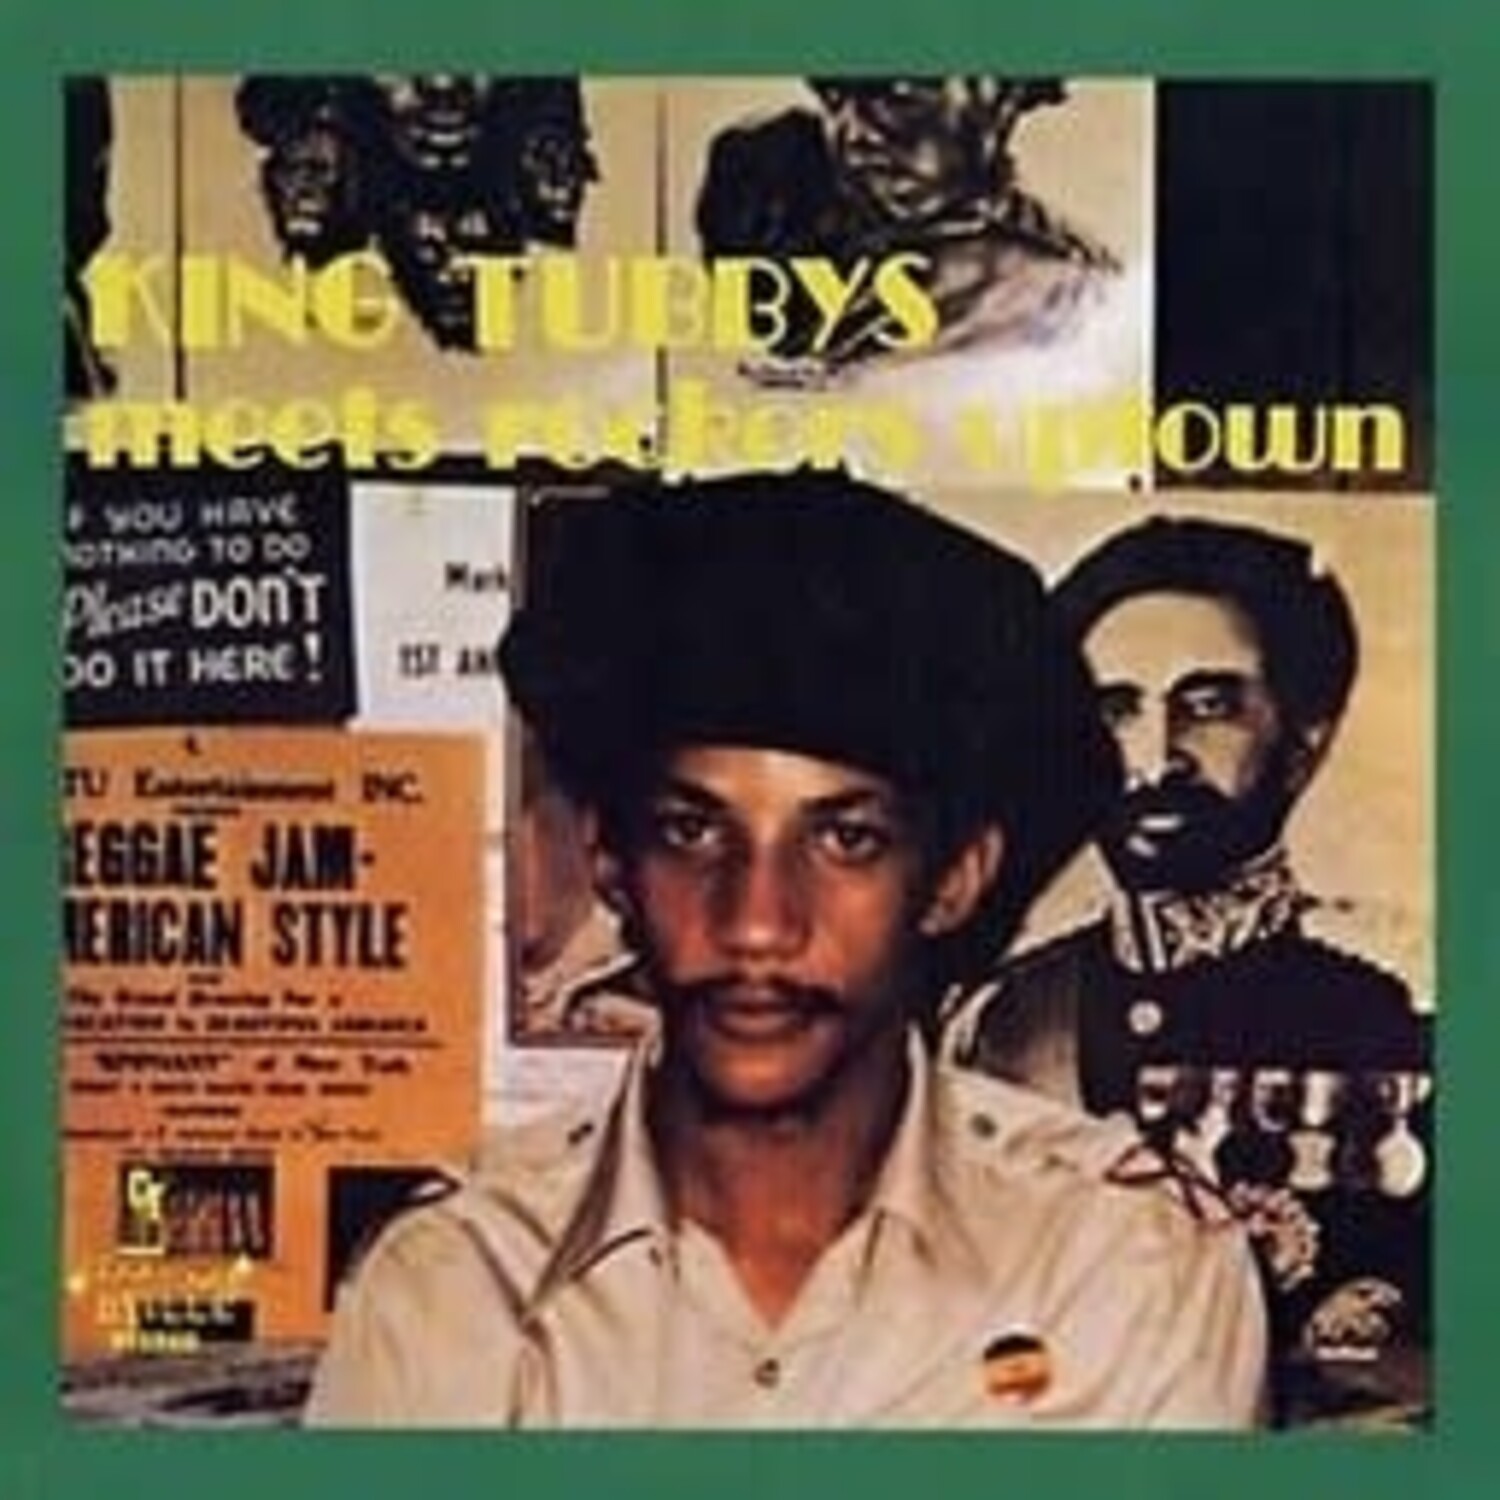 King Tubbys - meets rockers uptown - LP